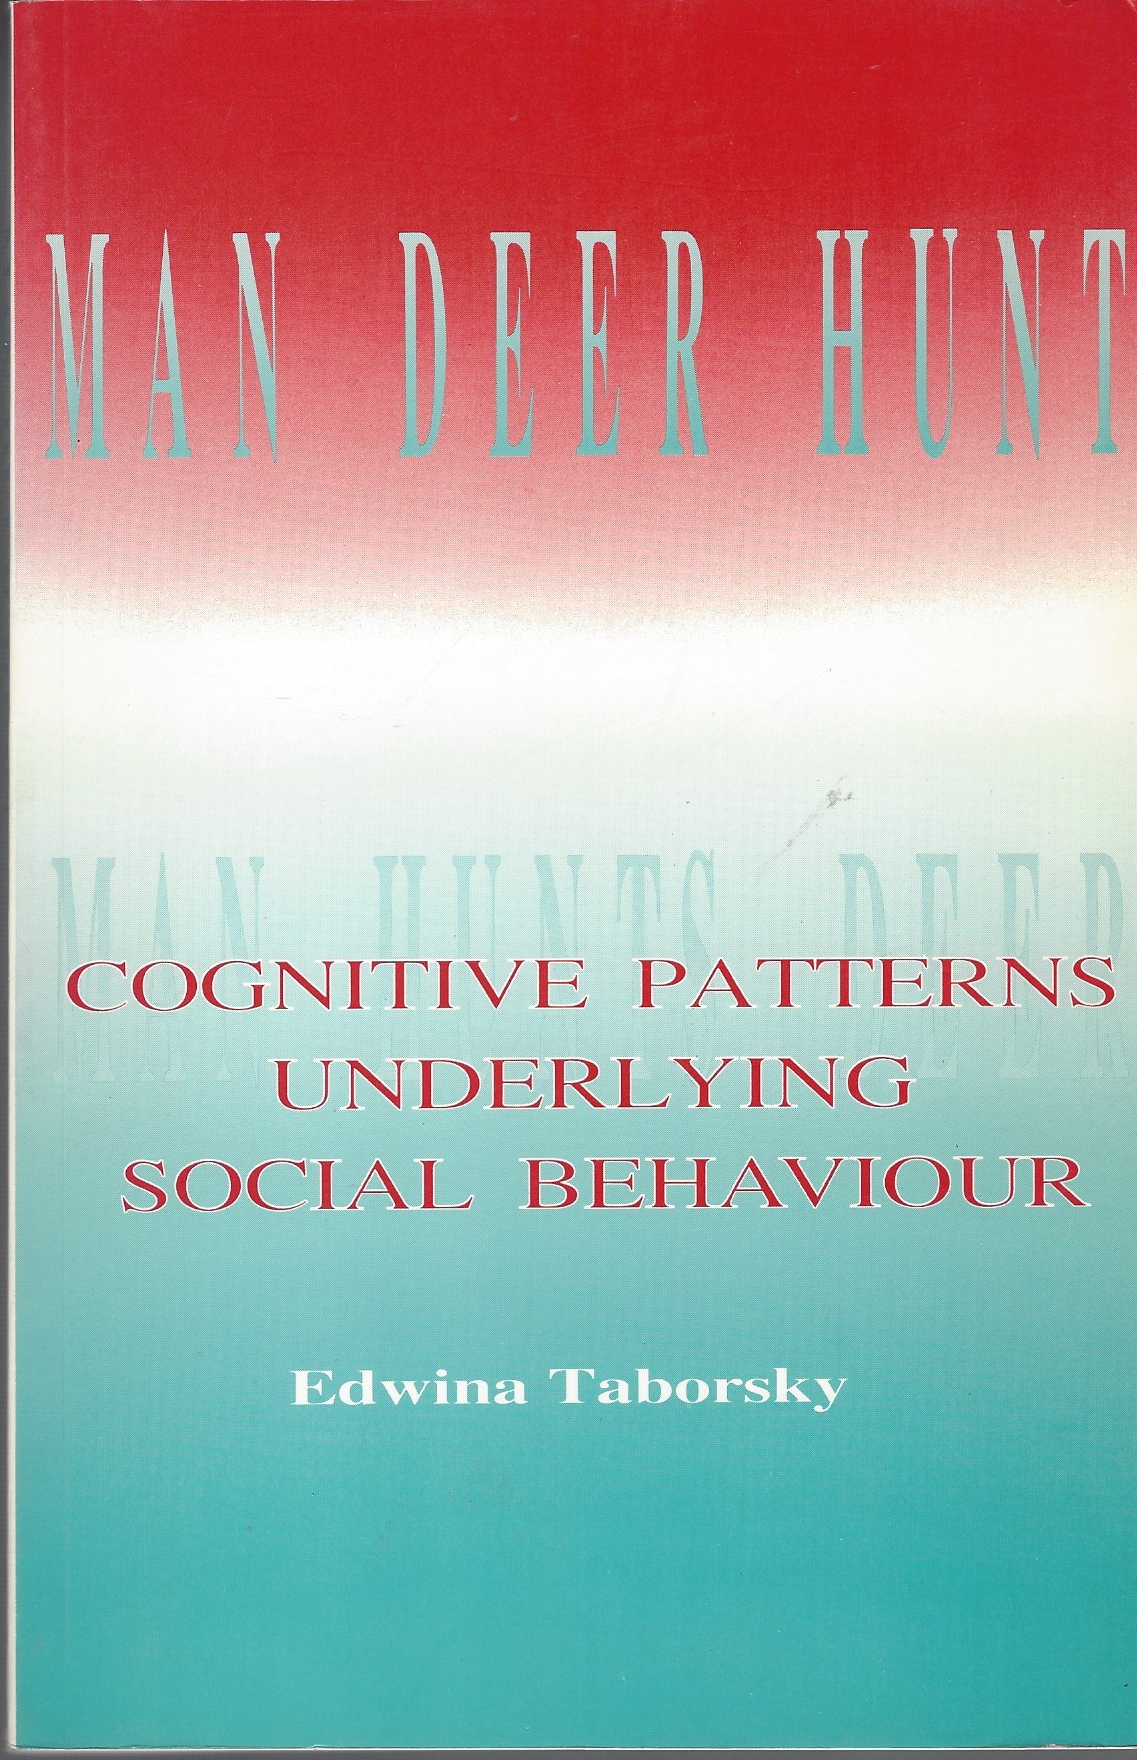 TABORSKY, EDWINA - Man Deer Hunt Cognitive Battery Underlying Social Behavior